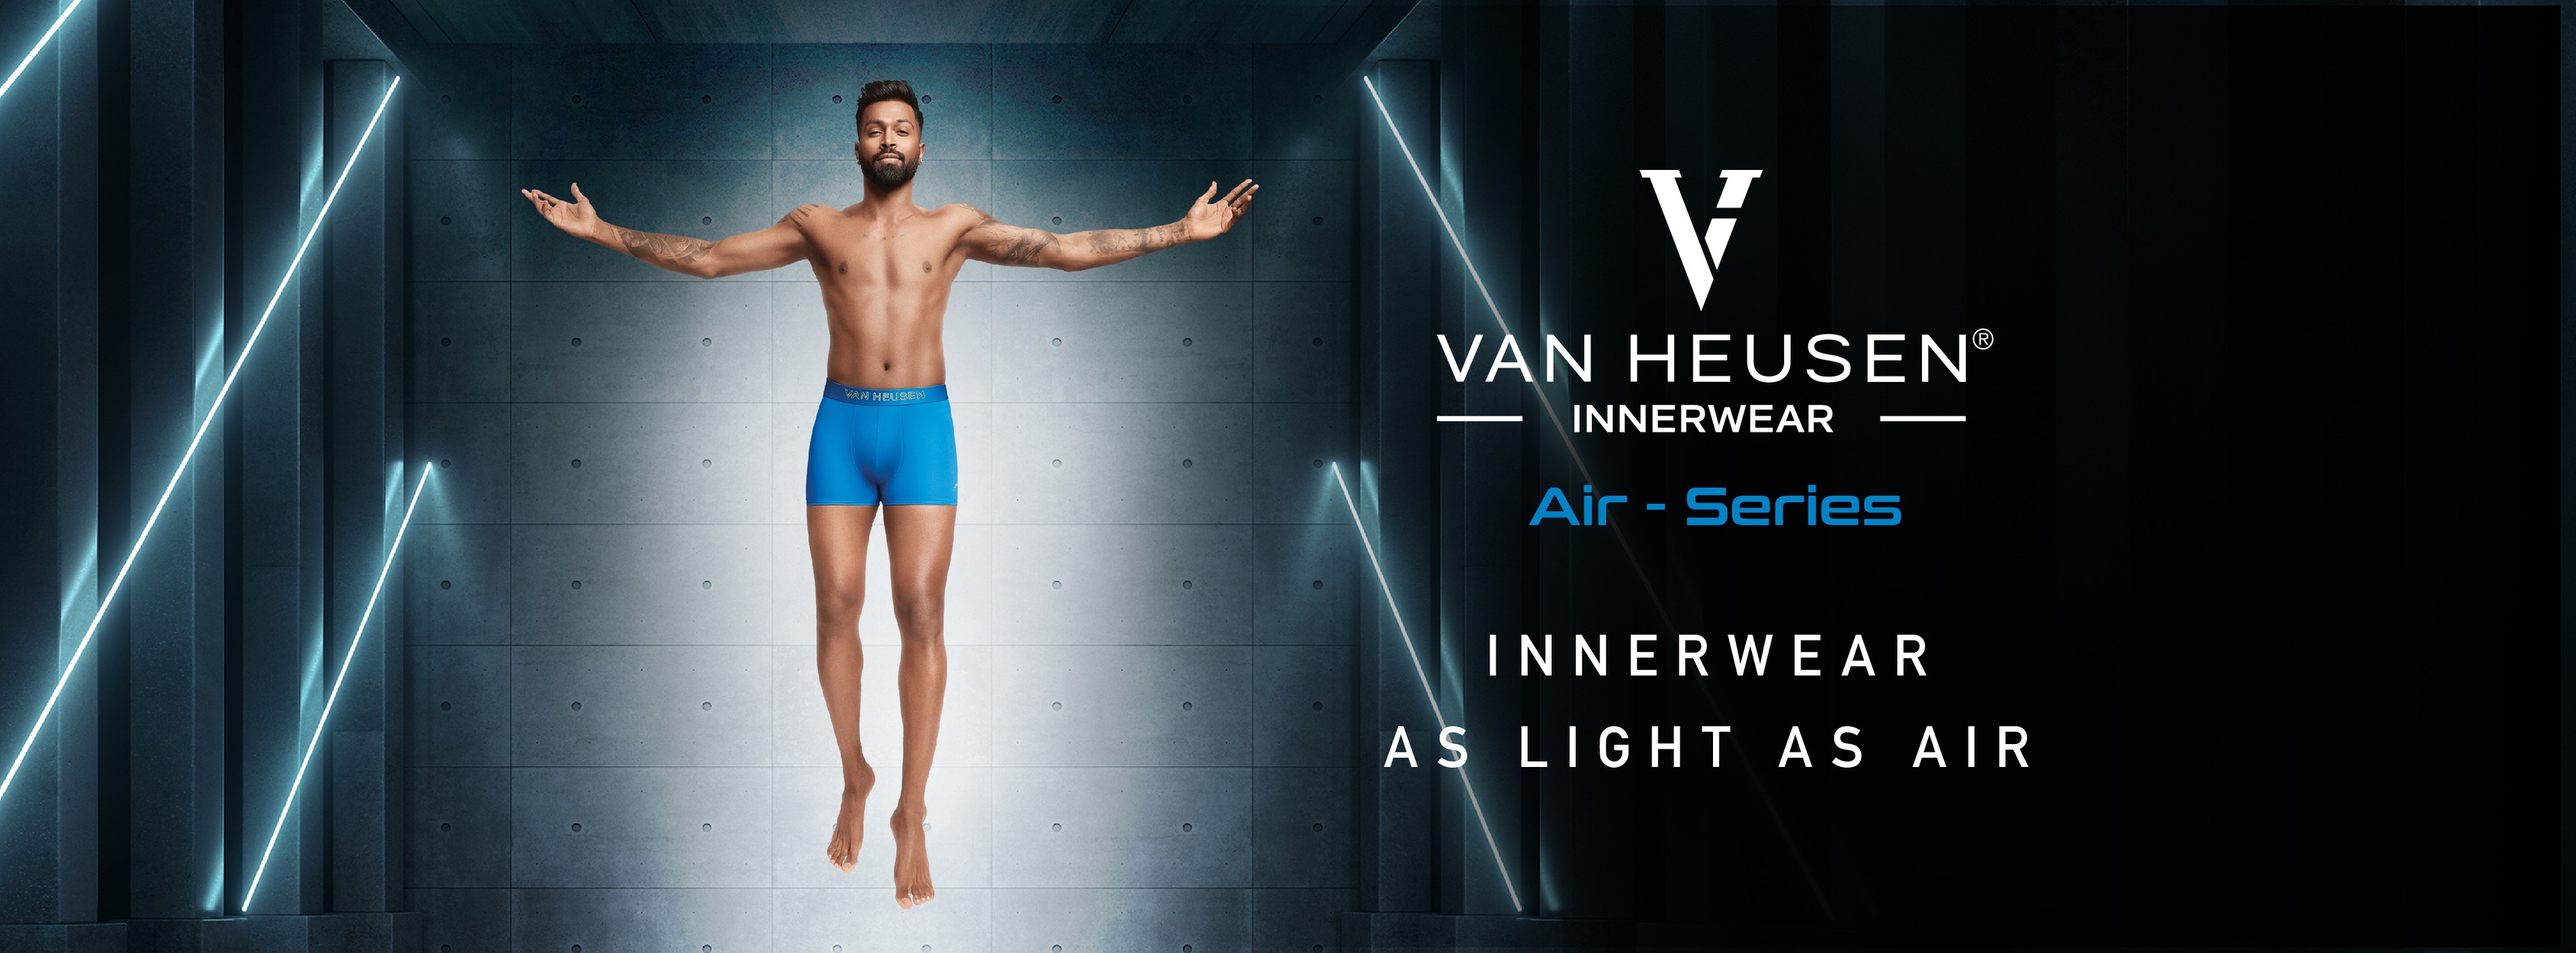 Van Heusen Innerwear Ad Model Name